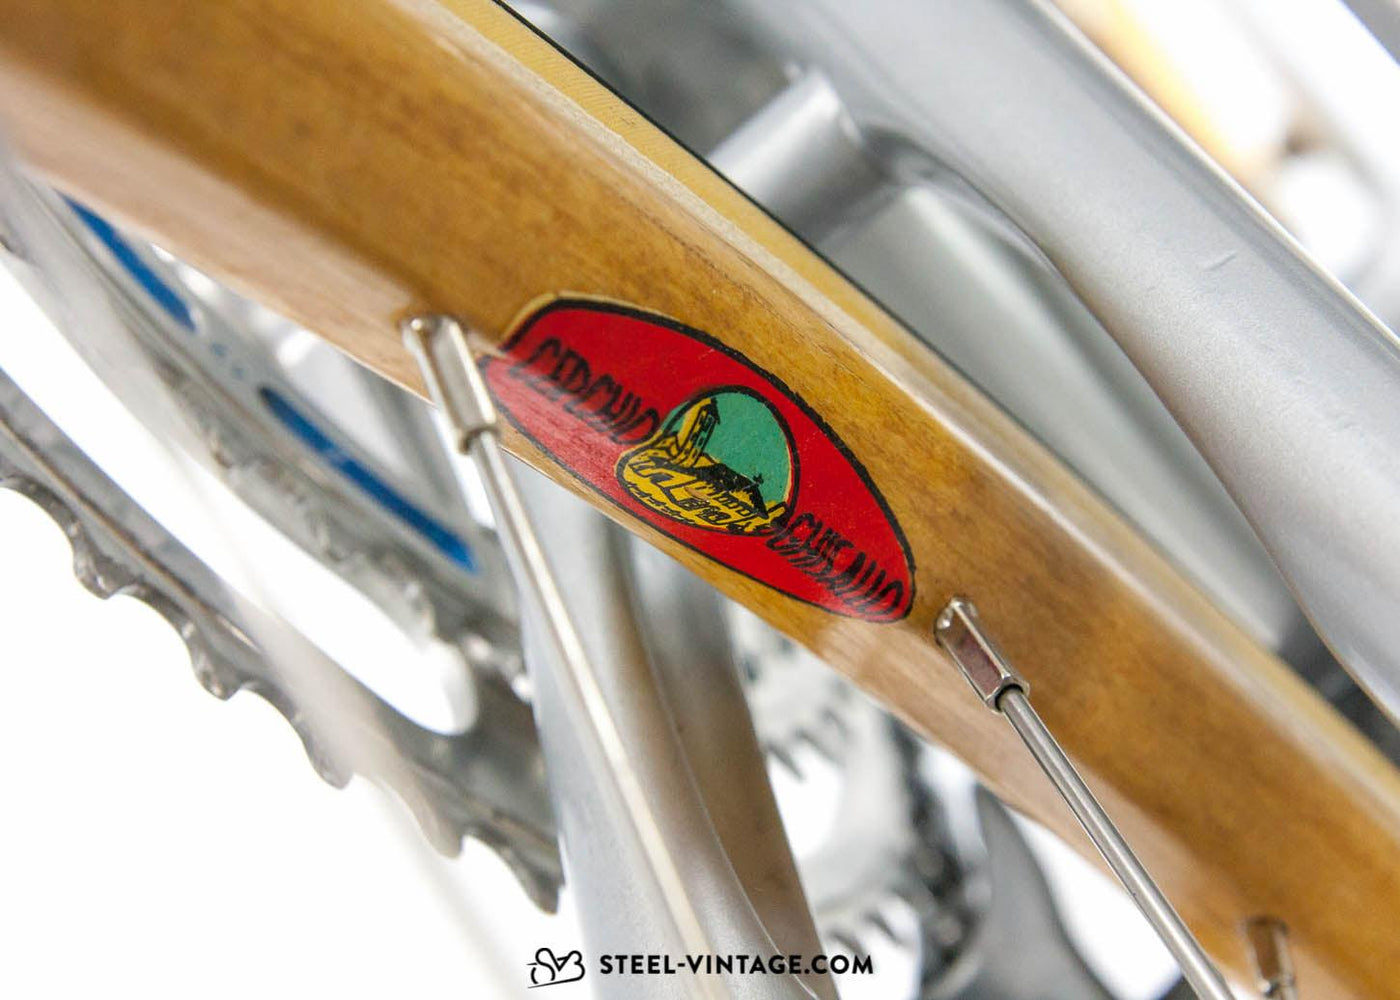 Fausto Coppi Classic Road Bike 1960 - Steel Vintage Bikes